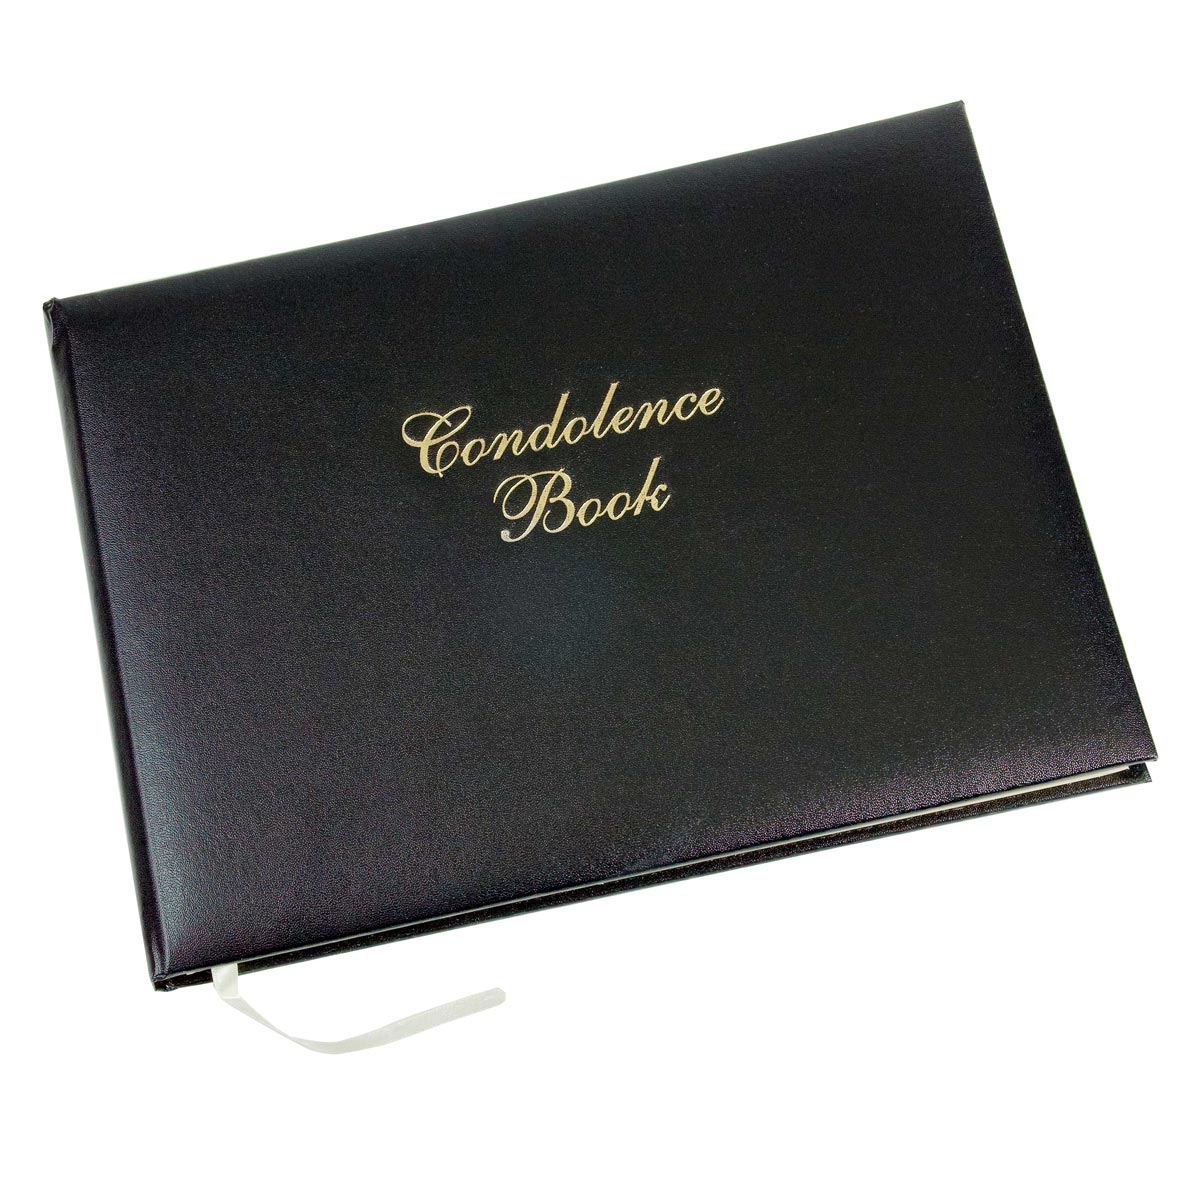 Esposti - Funeral Book of Condoleance Black met presentatiebox EL45